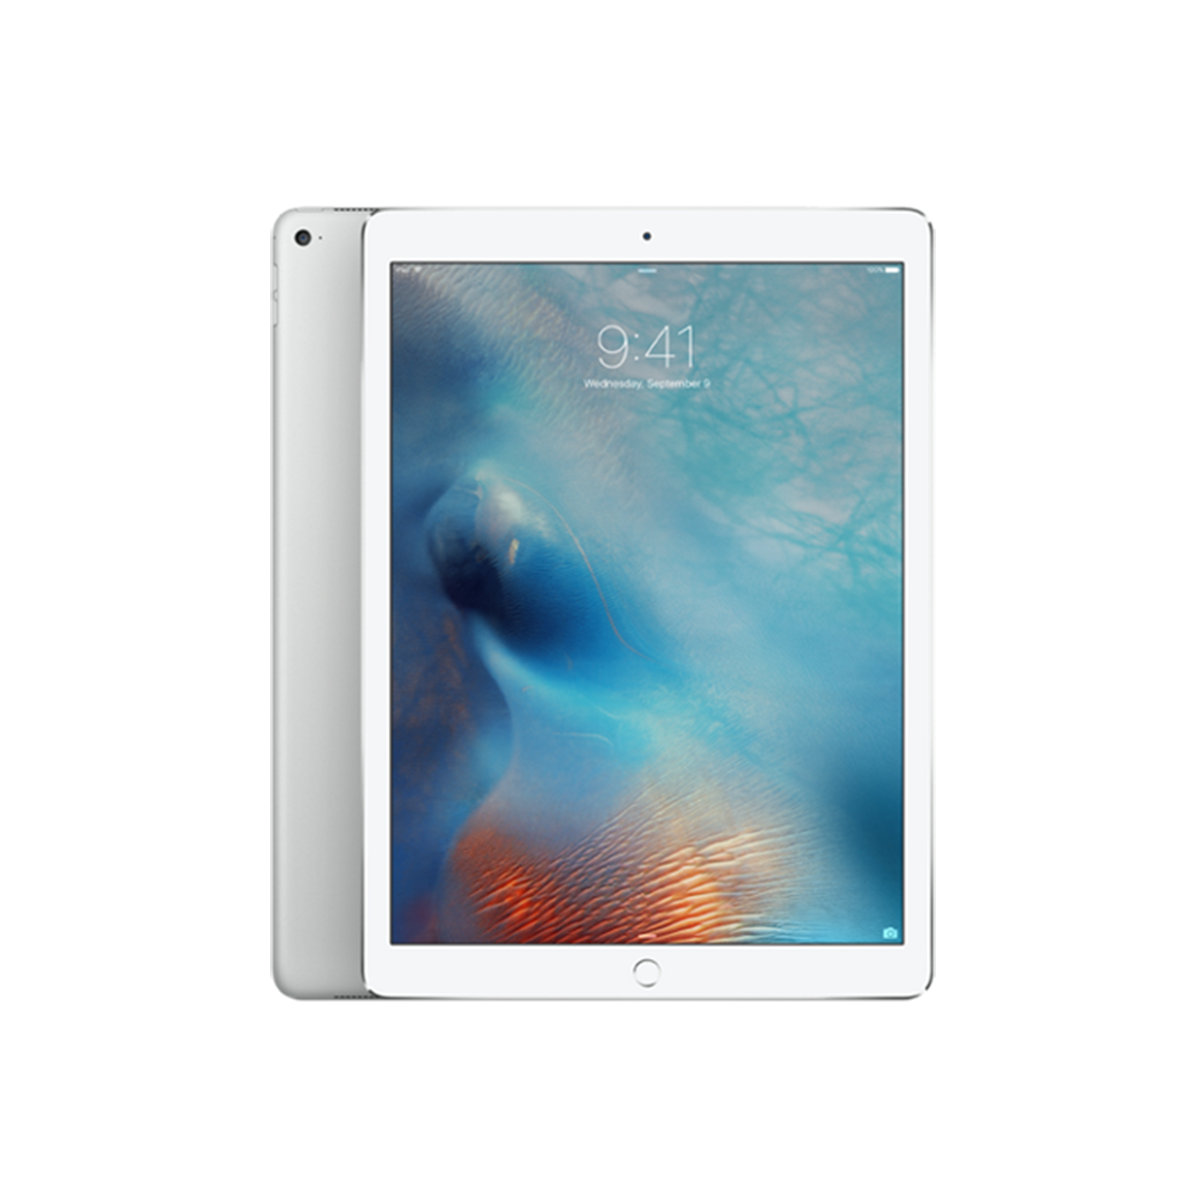  iPad Pro 12.9 inch WiFi Cellular 